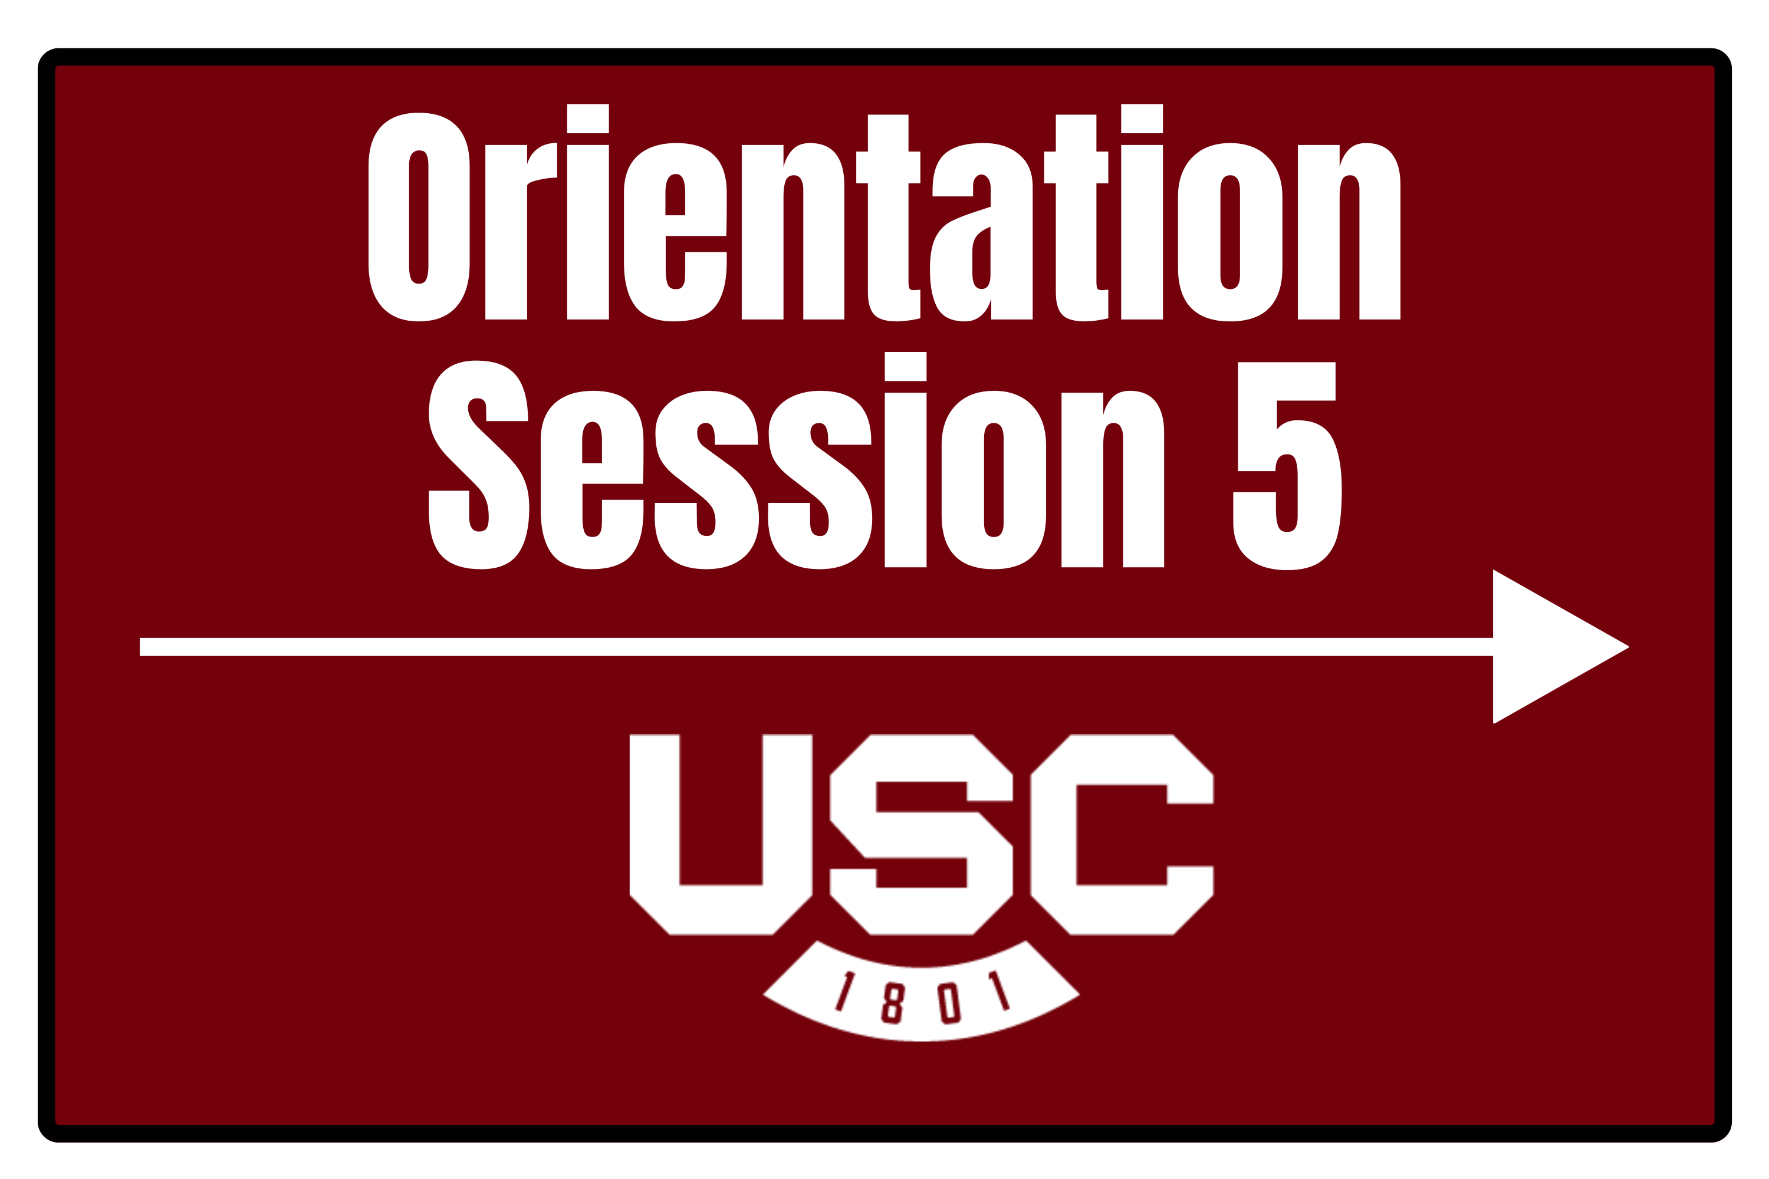 Orientation Session 5: June 10 - 11